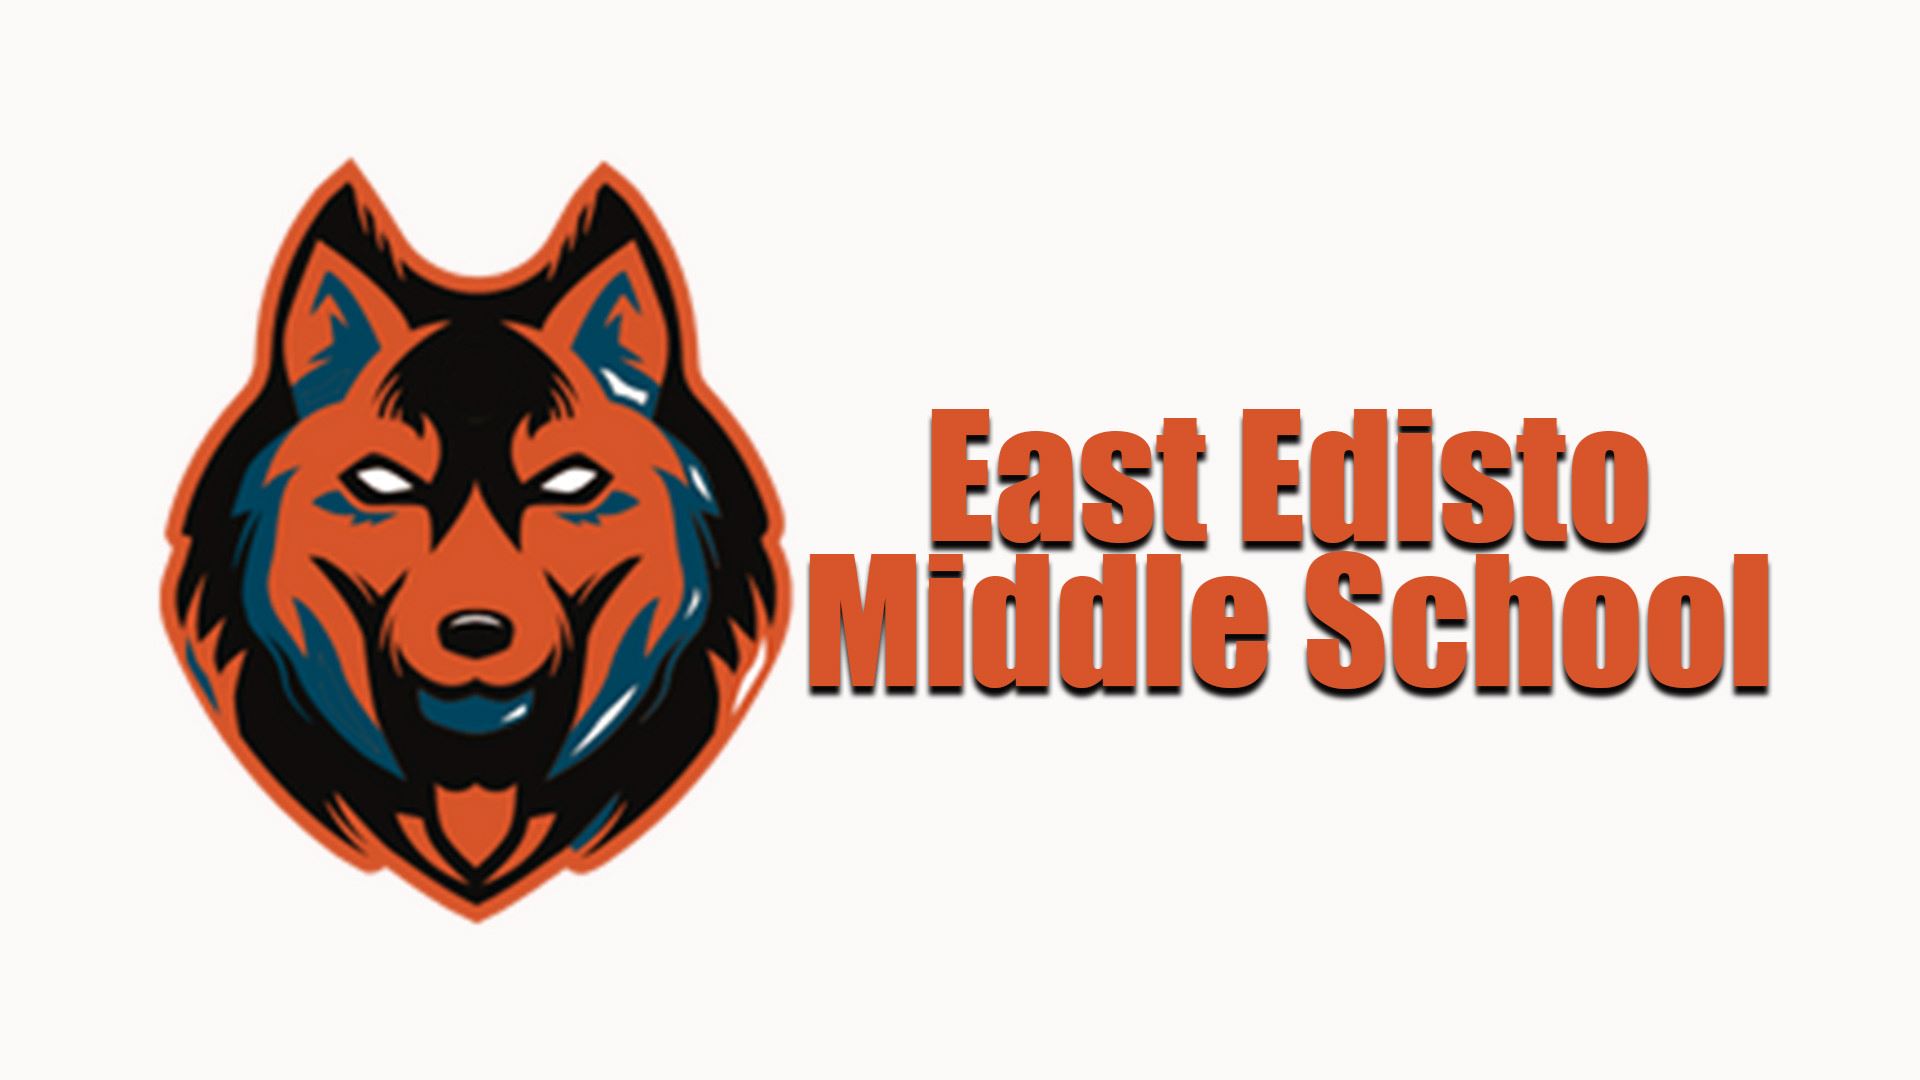 East Edisto Middle School Dance Team